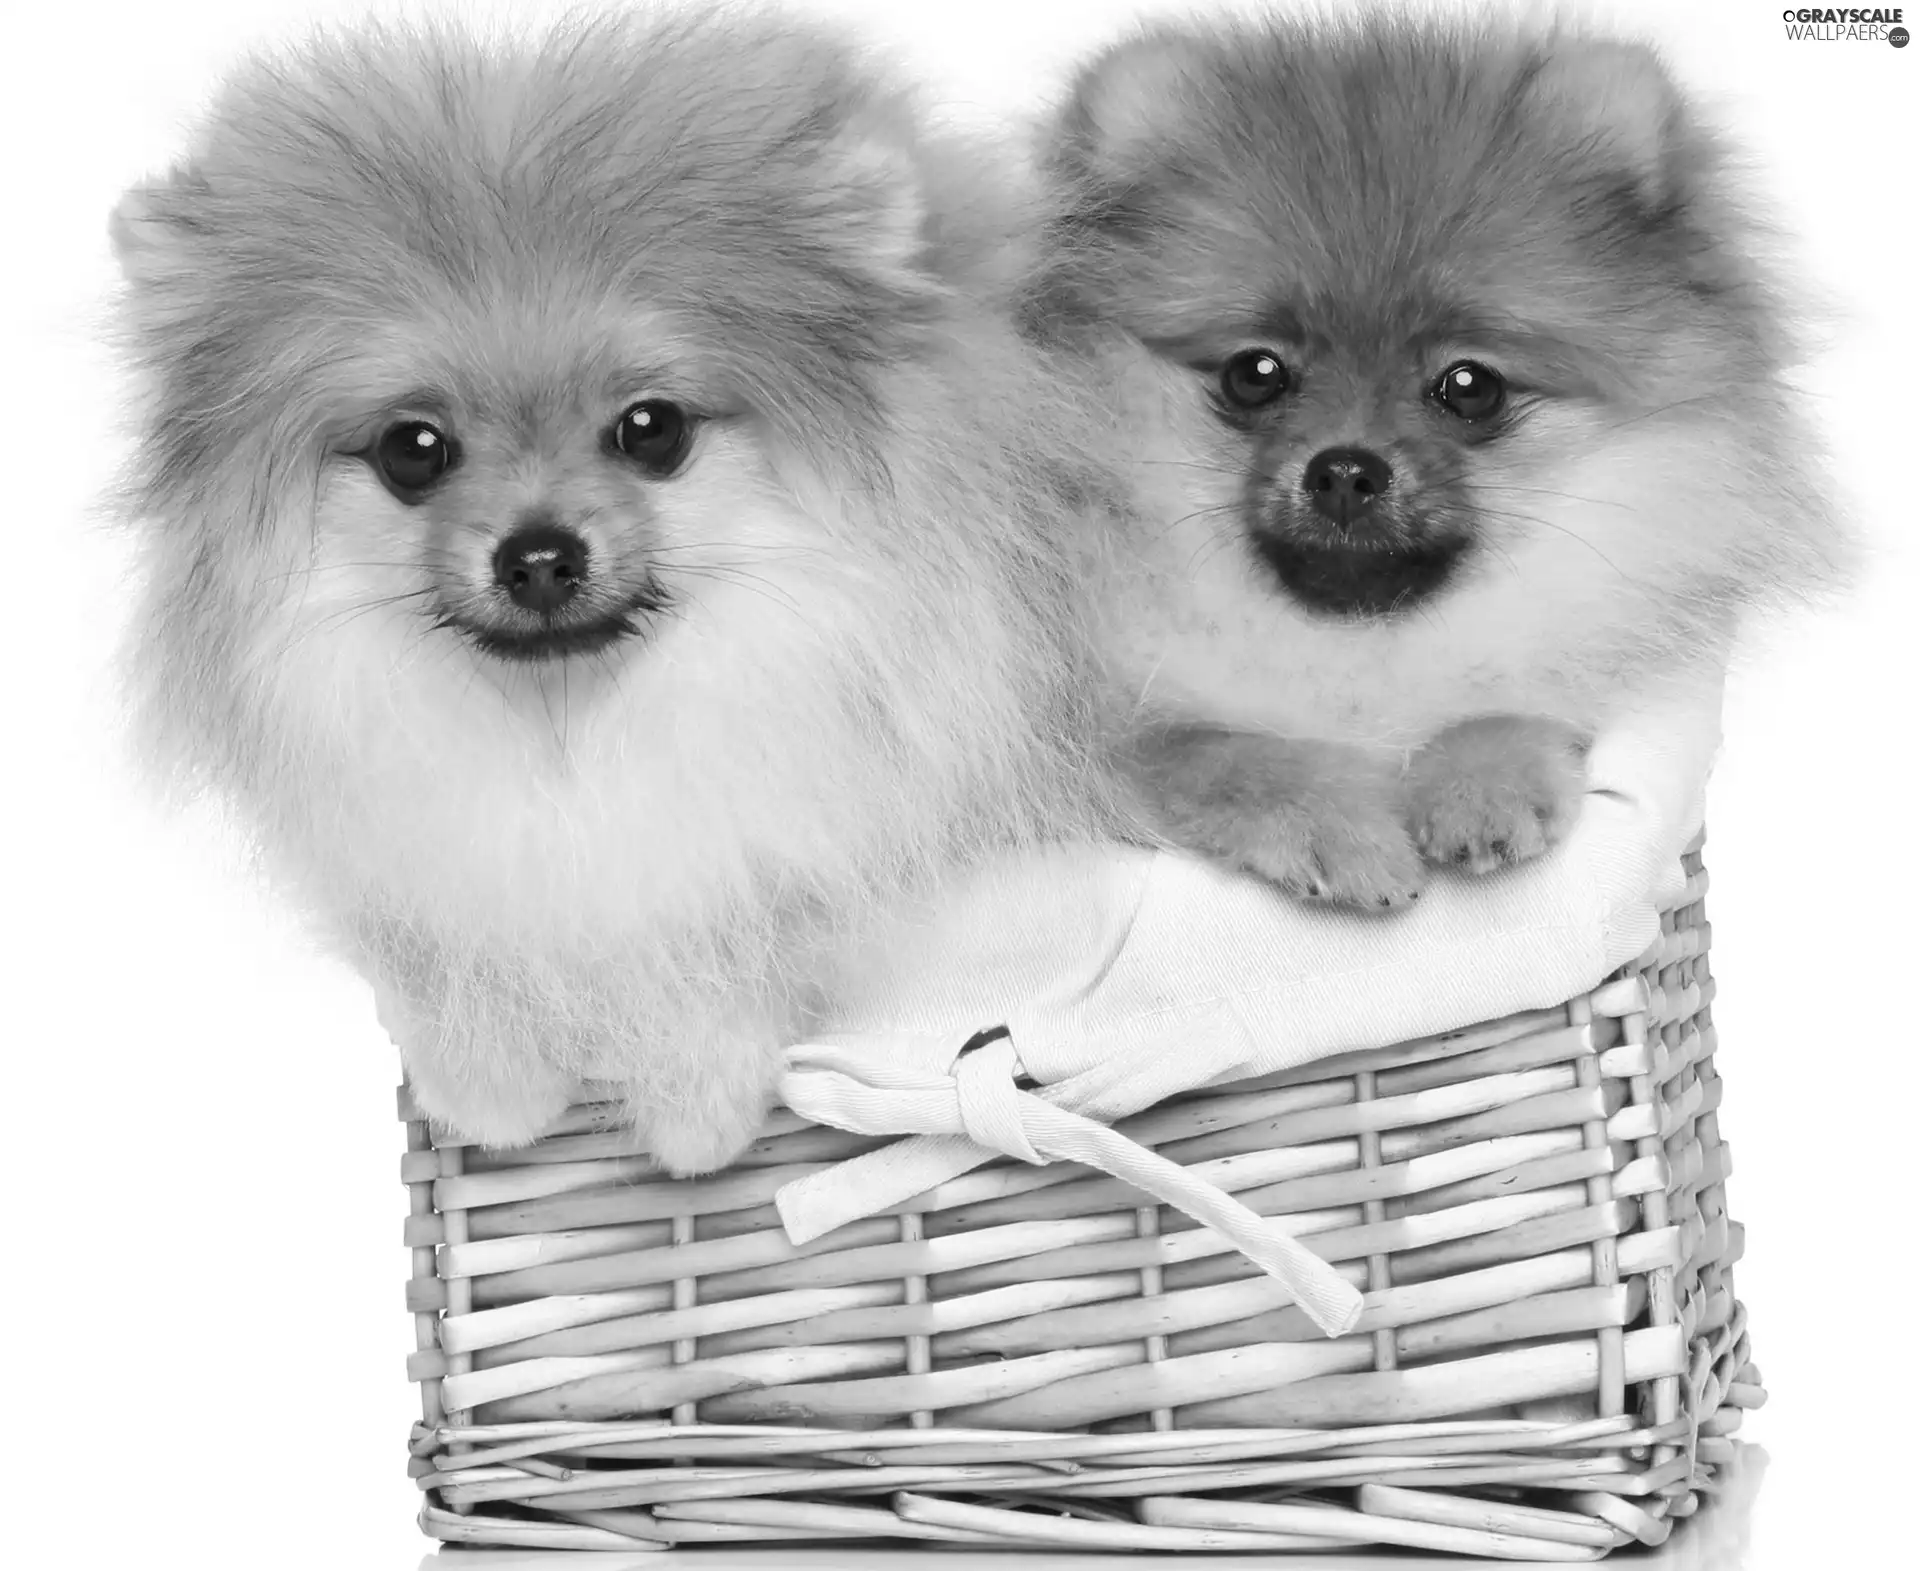 Dogs, Miniature Spitz, Pomeranians, basket